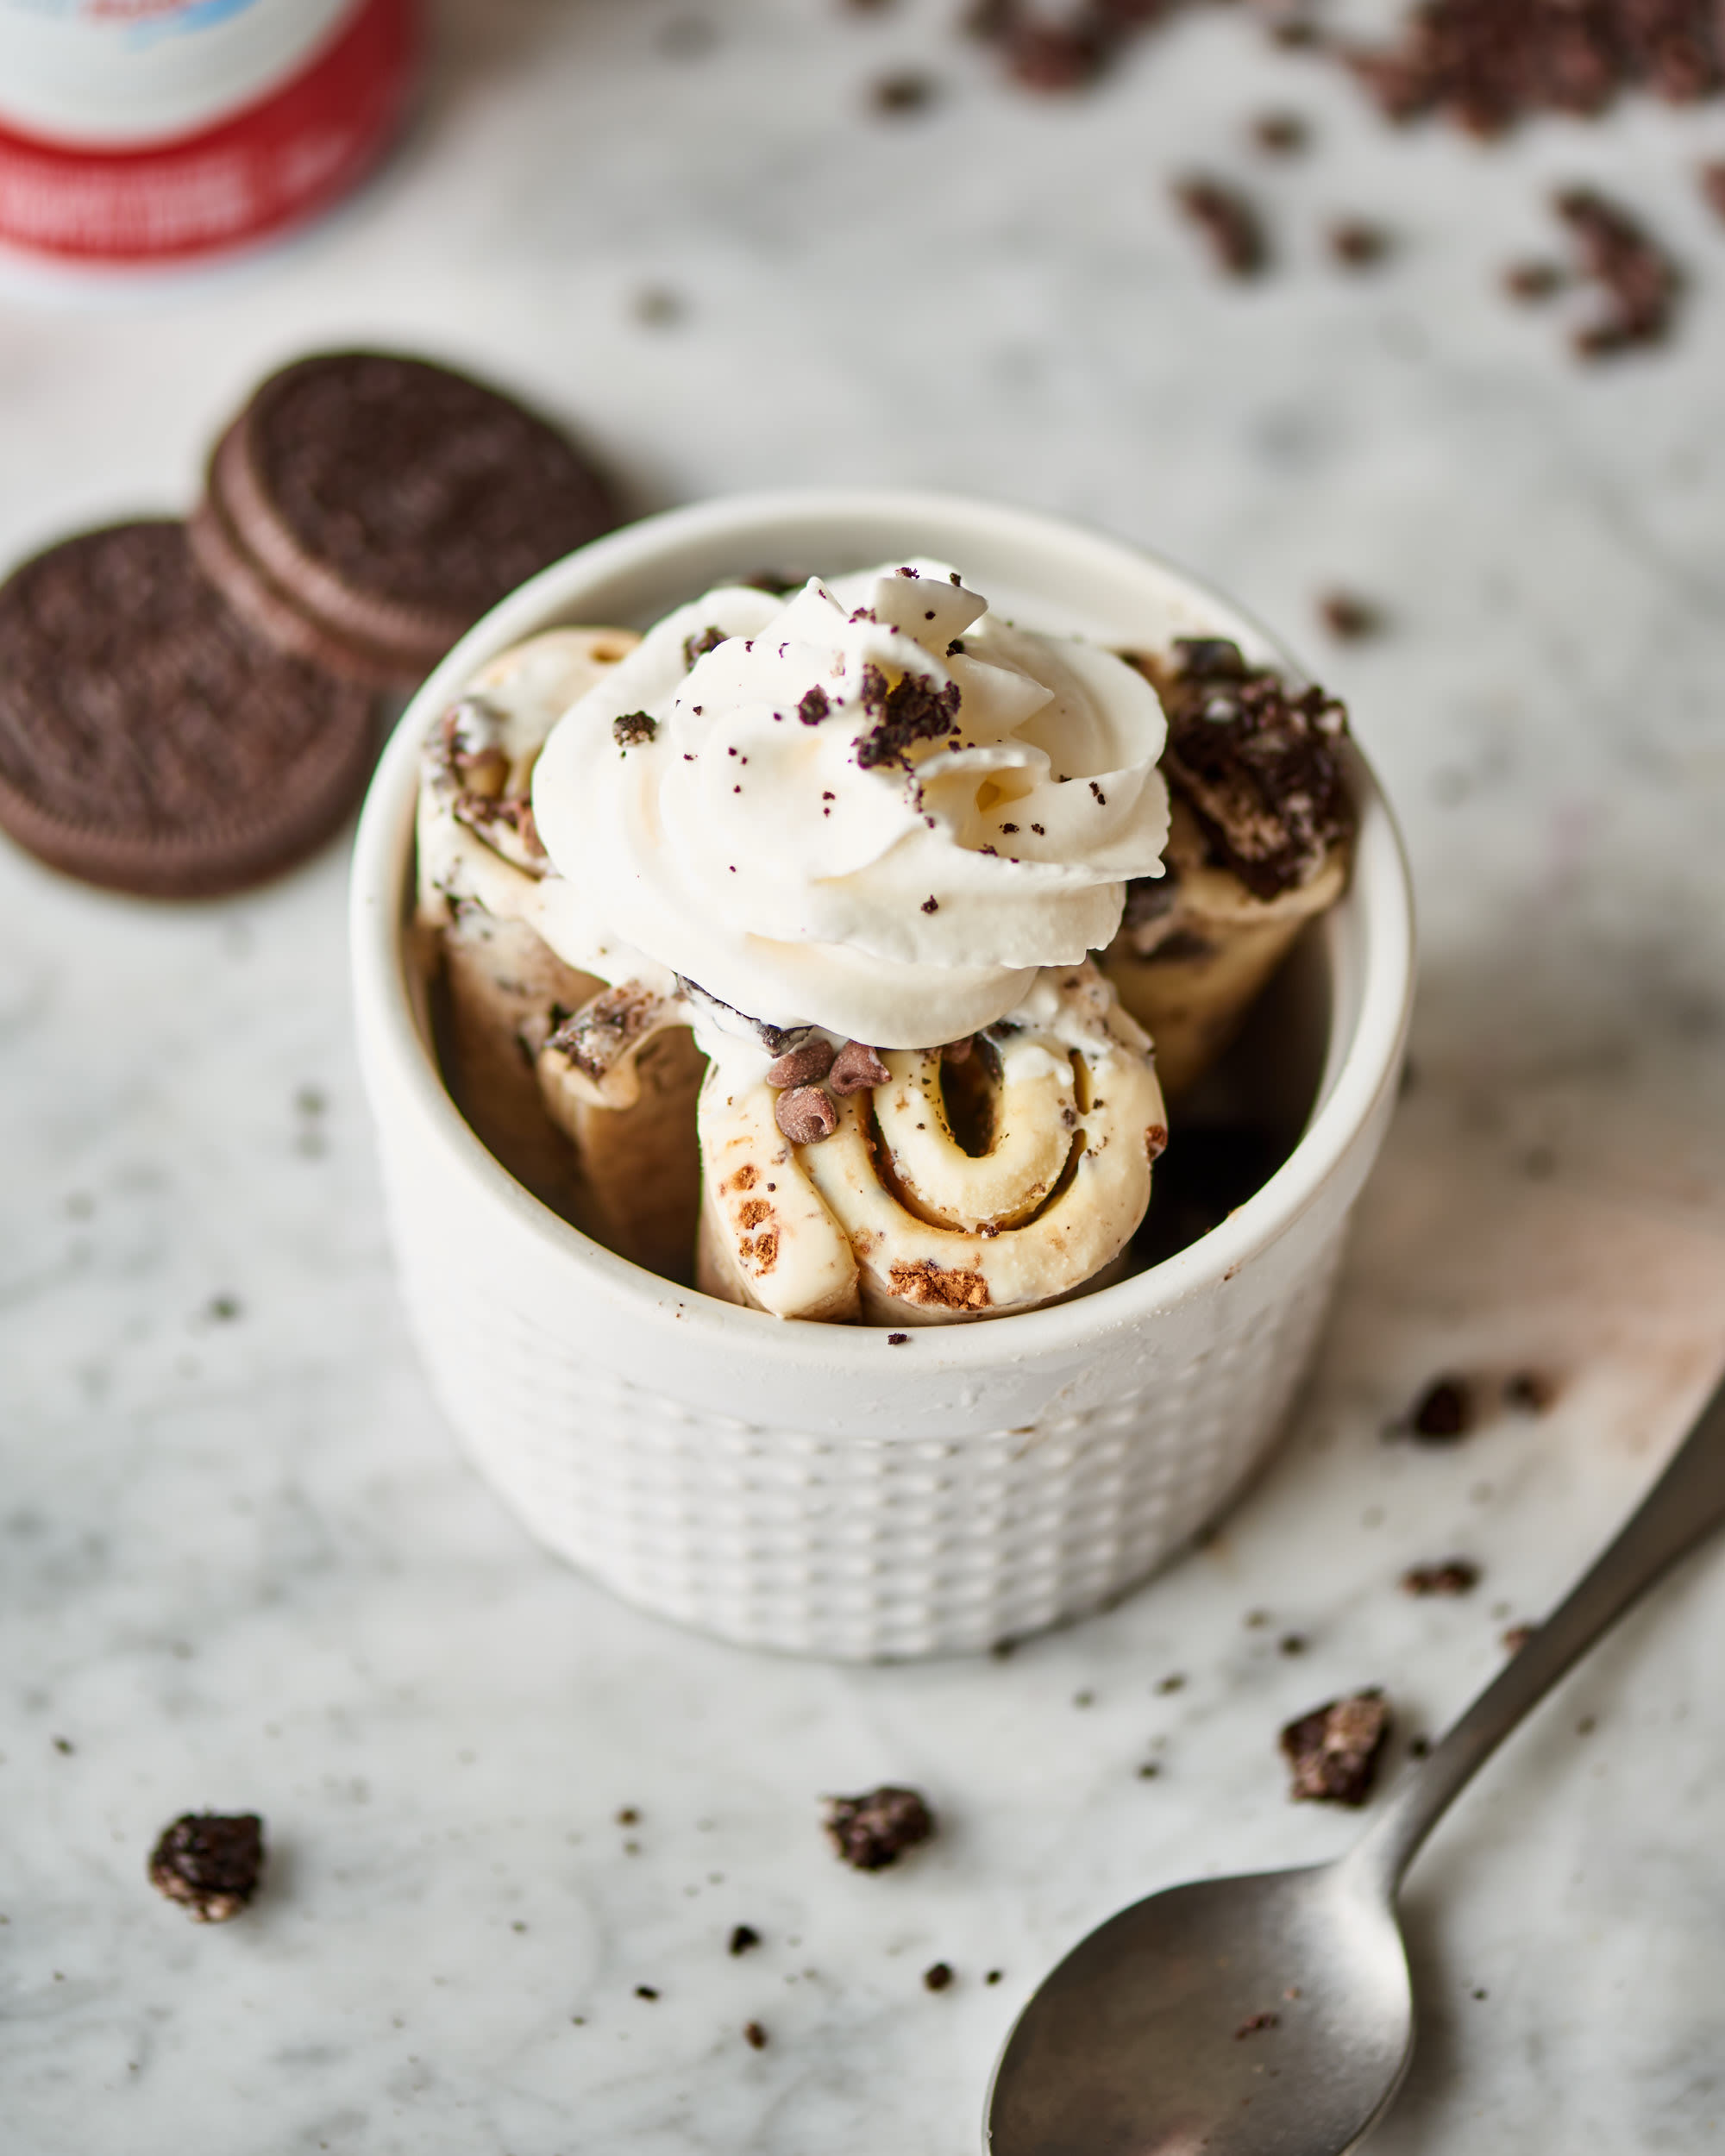 Rolled Ice Cream - Amanda's Cookin' - Ice Cream & Frozen Treats